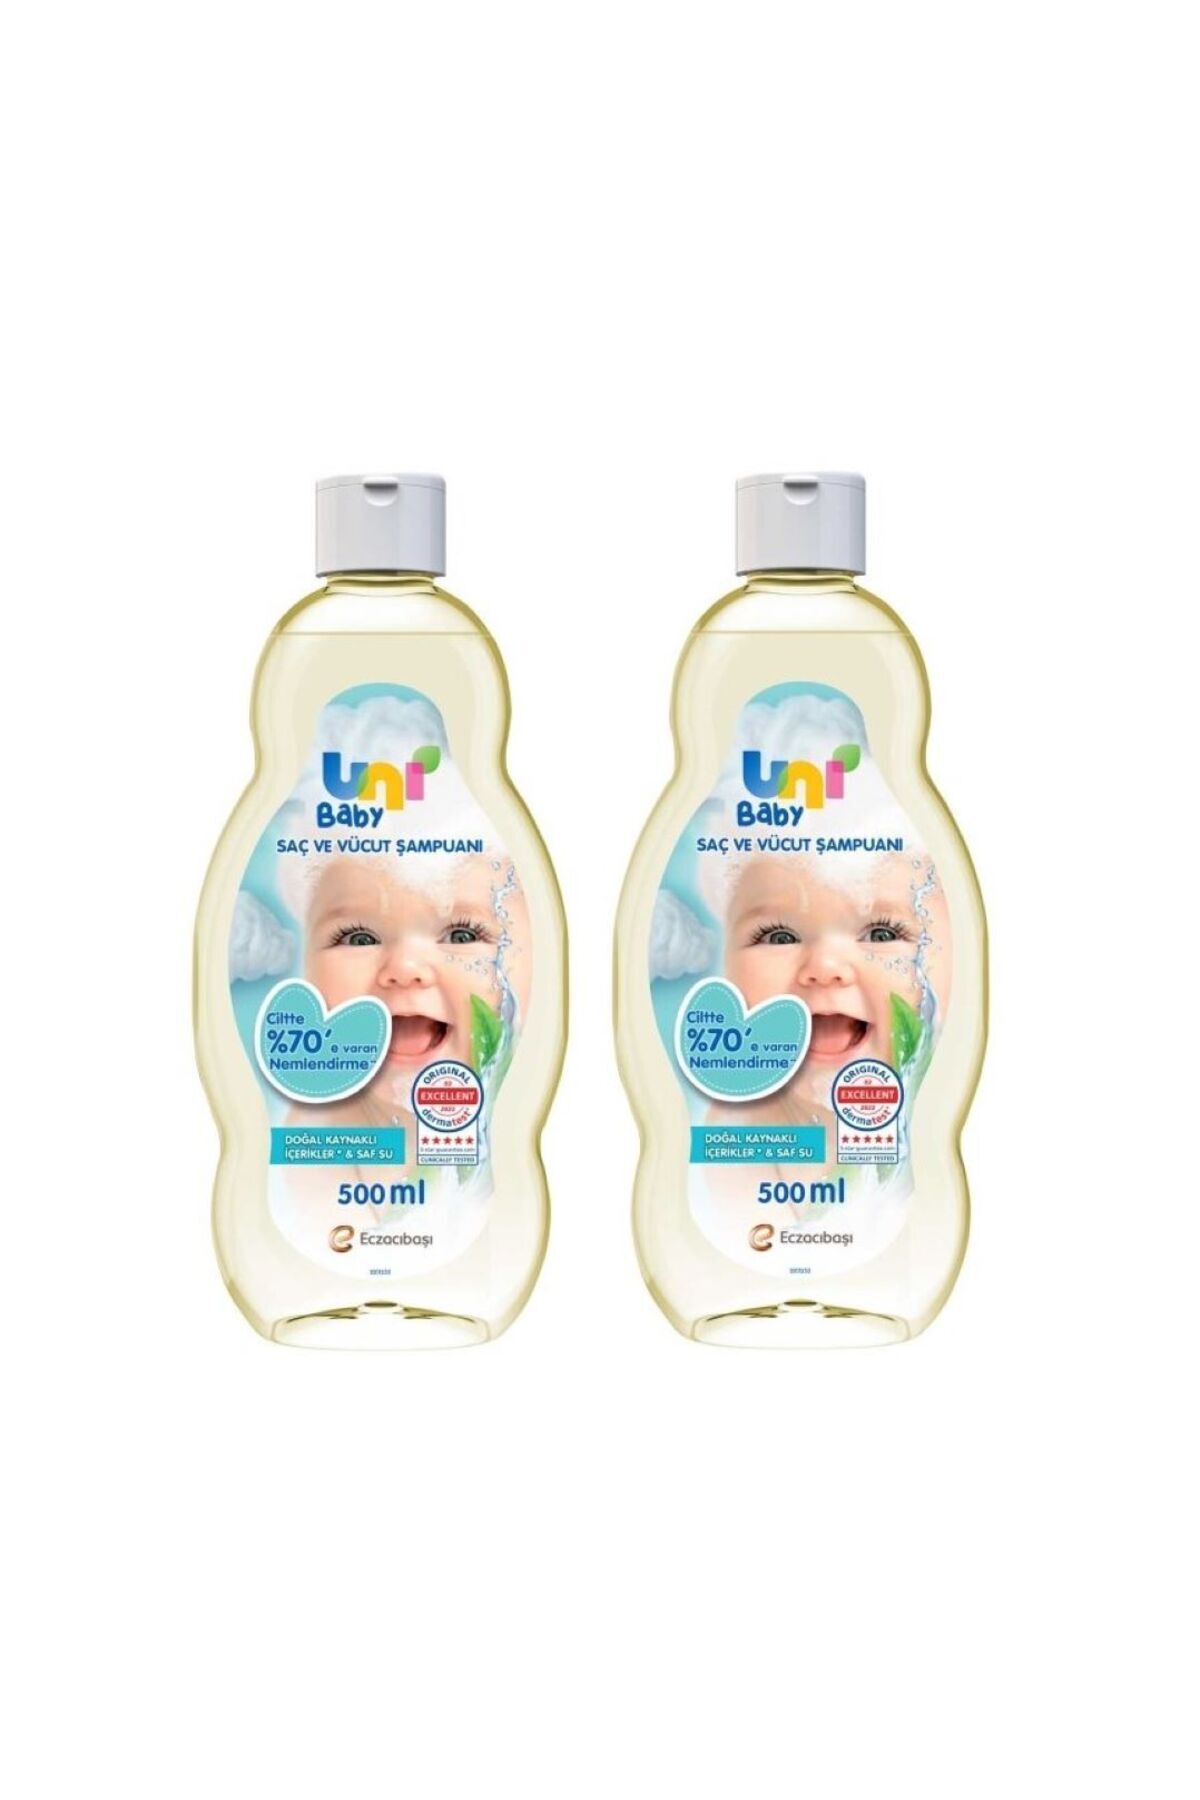 Uni Baby Saç ve Vücut Şampuan 500 ml 2 Adet